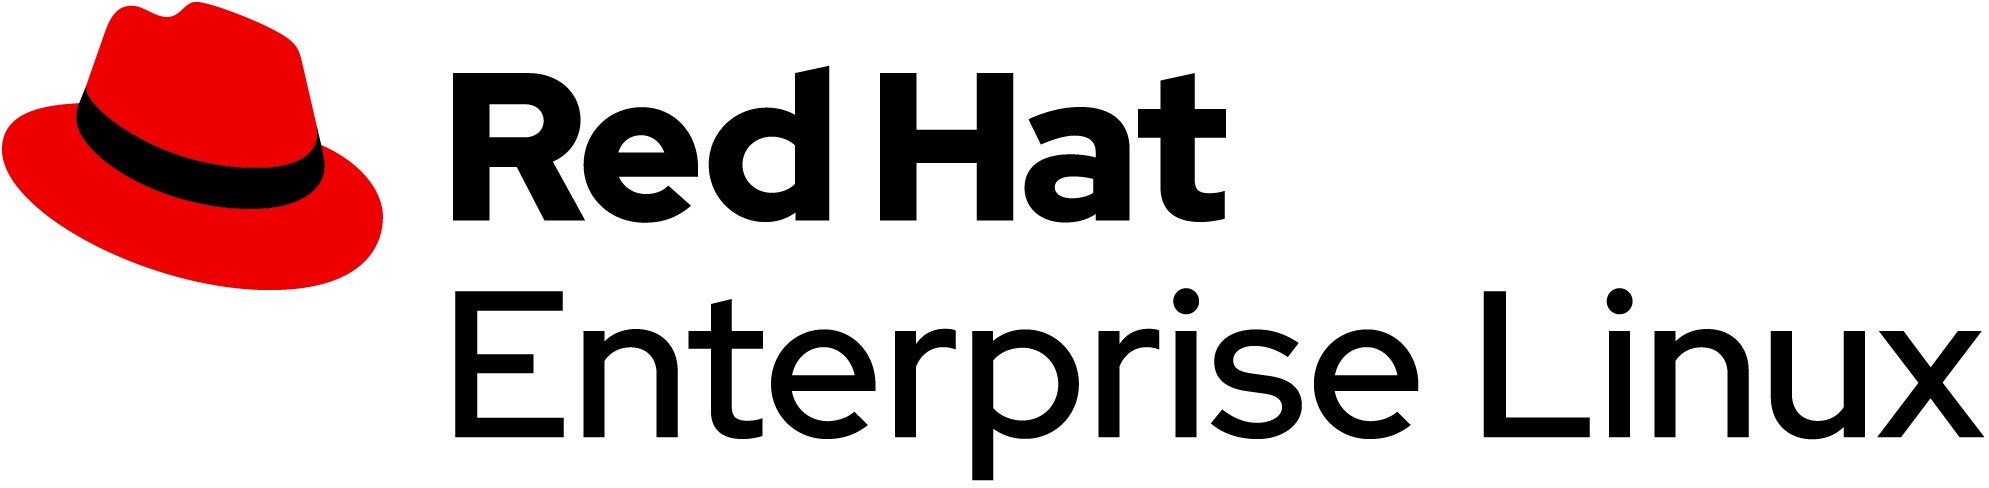 Red Hat Enterprise Linux Workstation,  Premium,  1 Year subscription0 